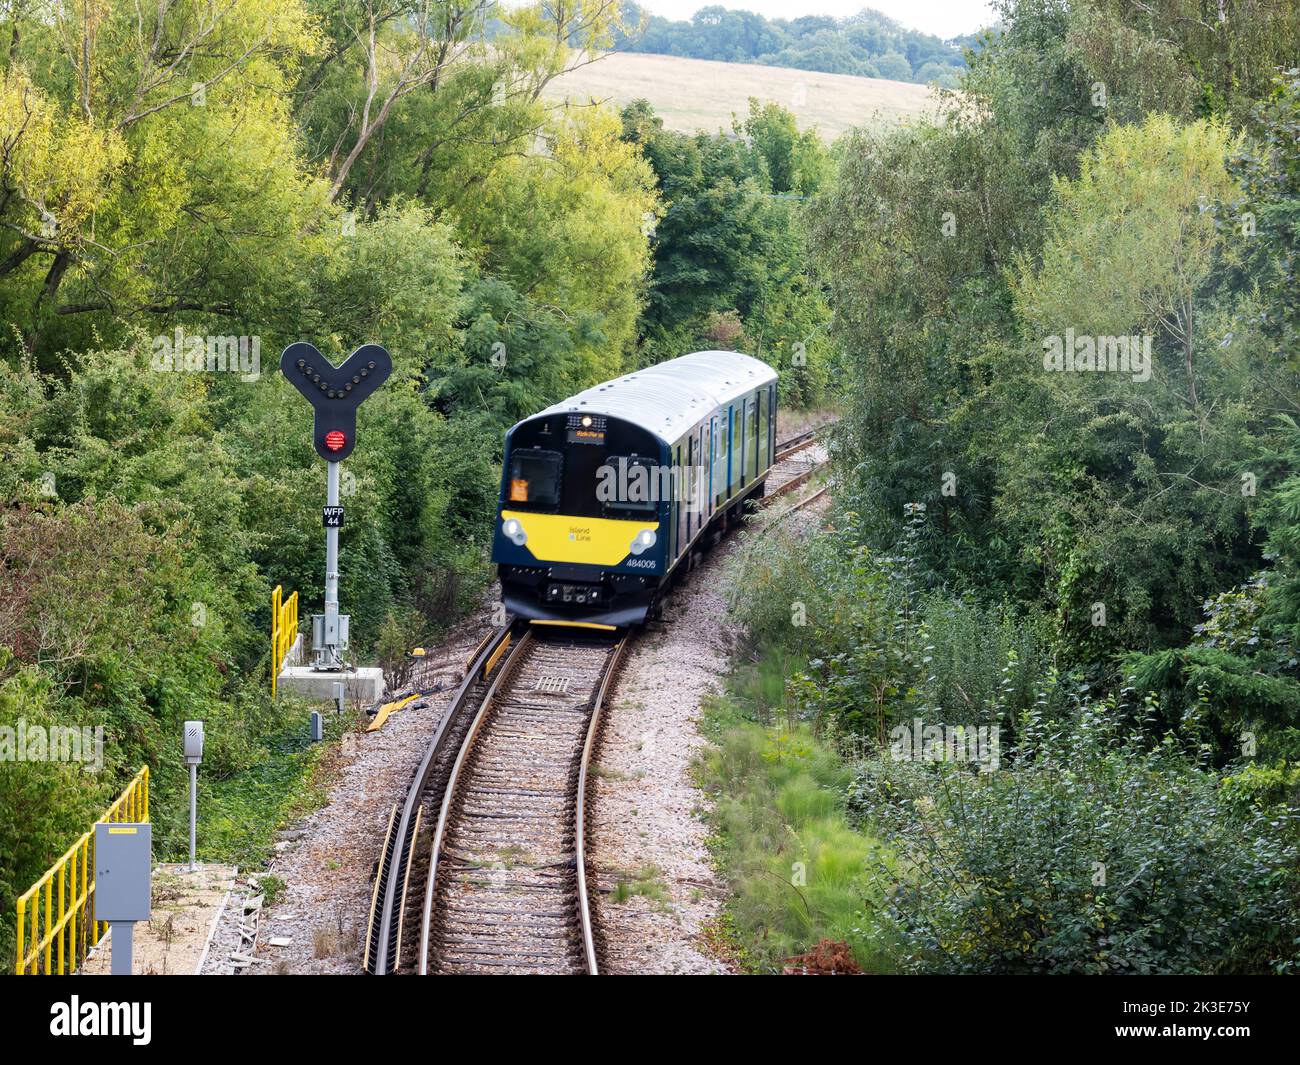 A train on the Isle of White railway at Brading, UK. Stock Photo